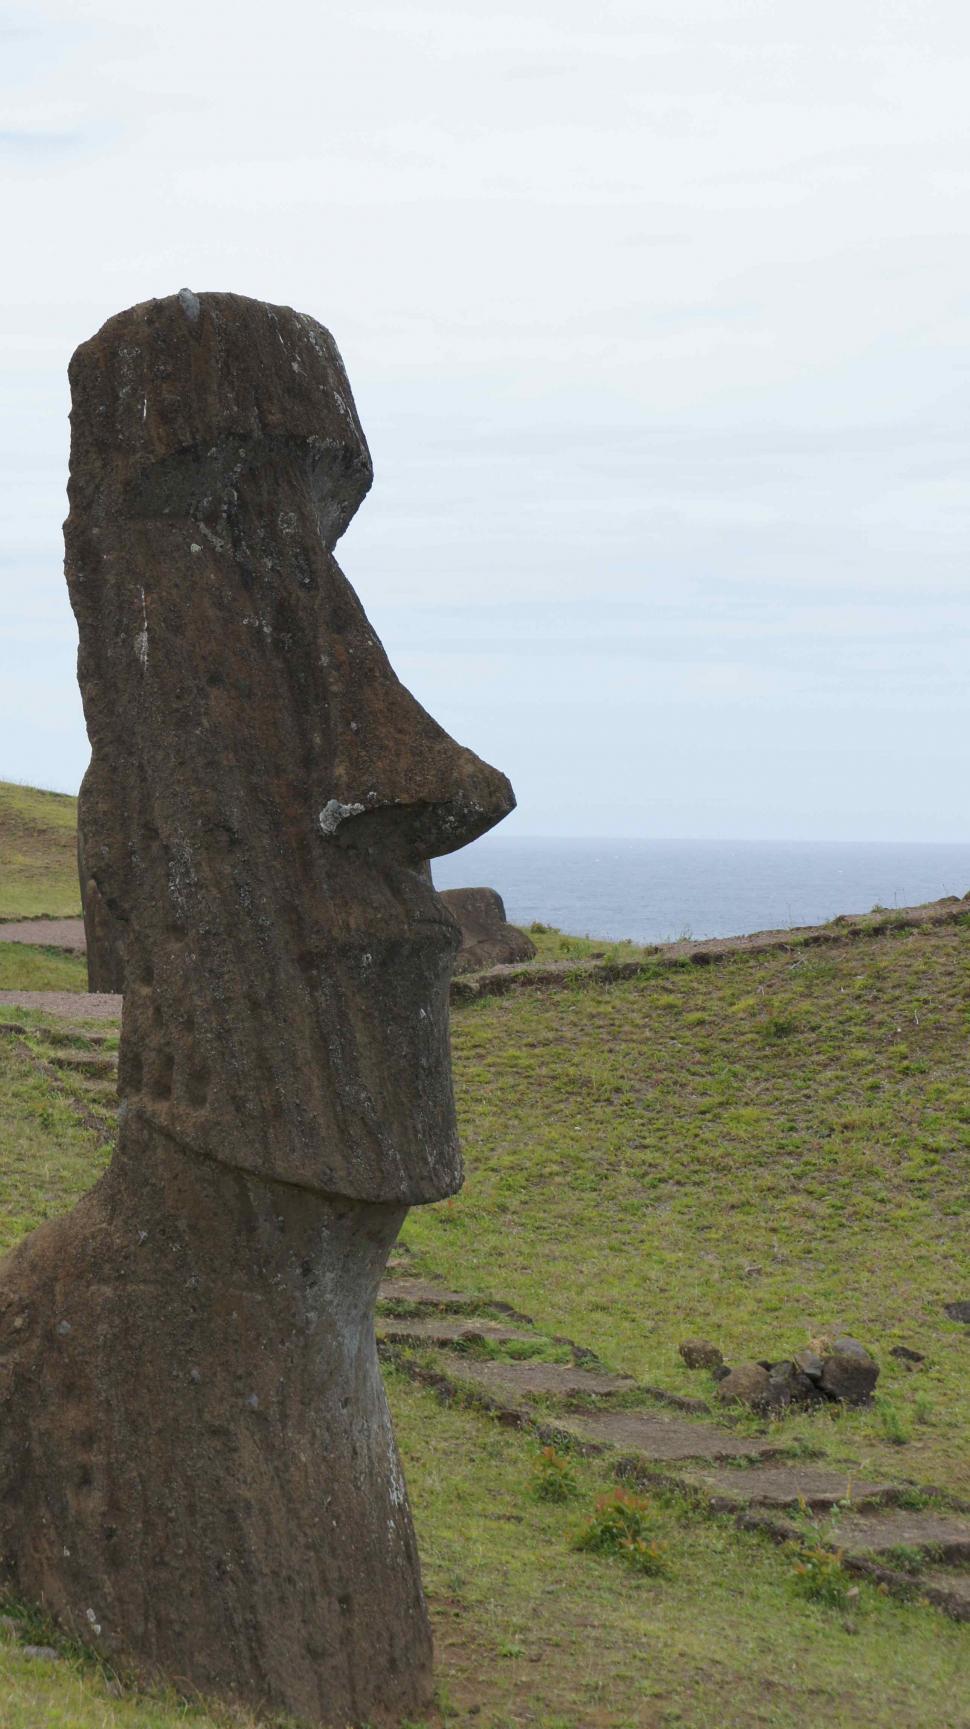 Free Image of Moai Head Statues of Easter Island 